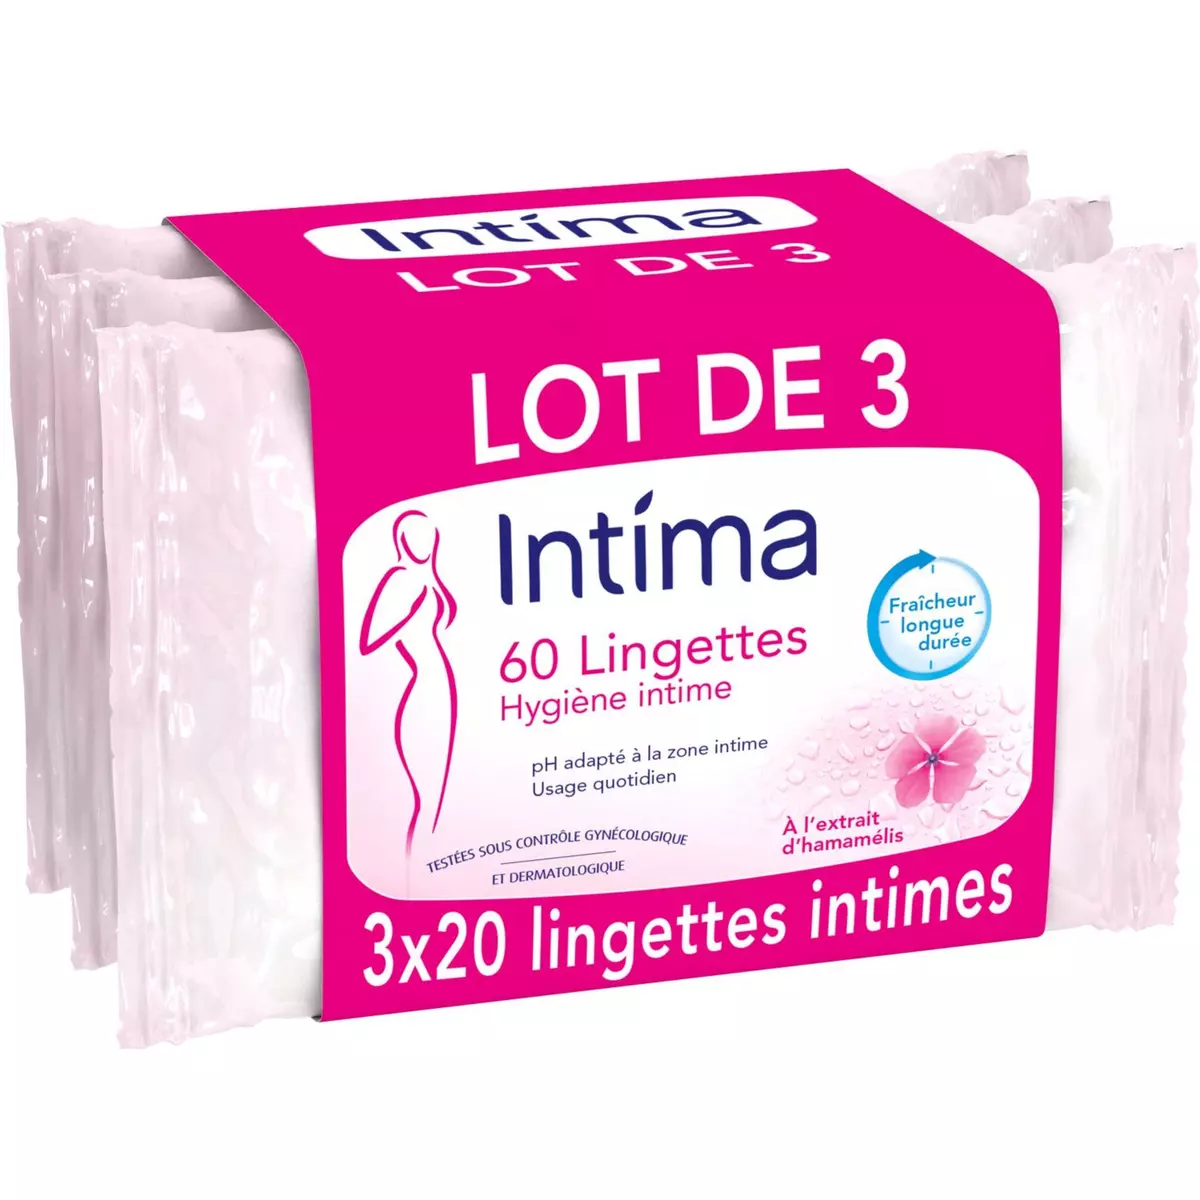 INTIMA Lingettes hygiène intime 3x20 lingettes